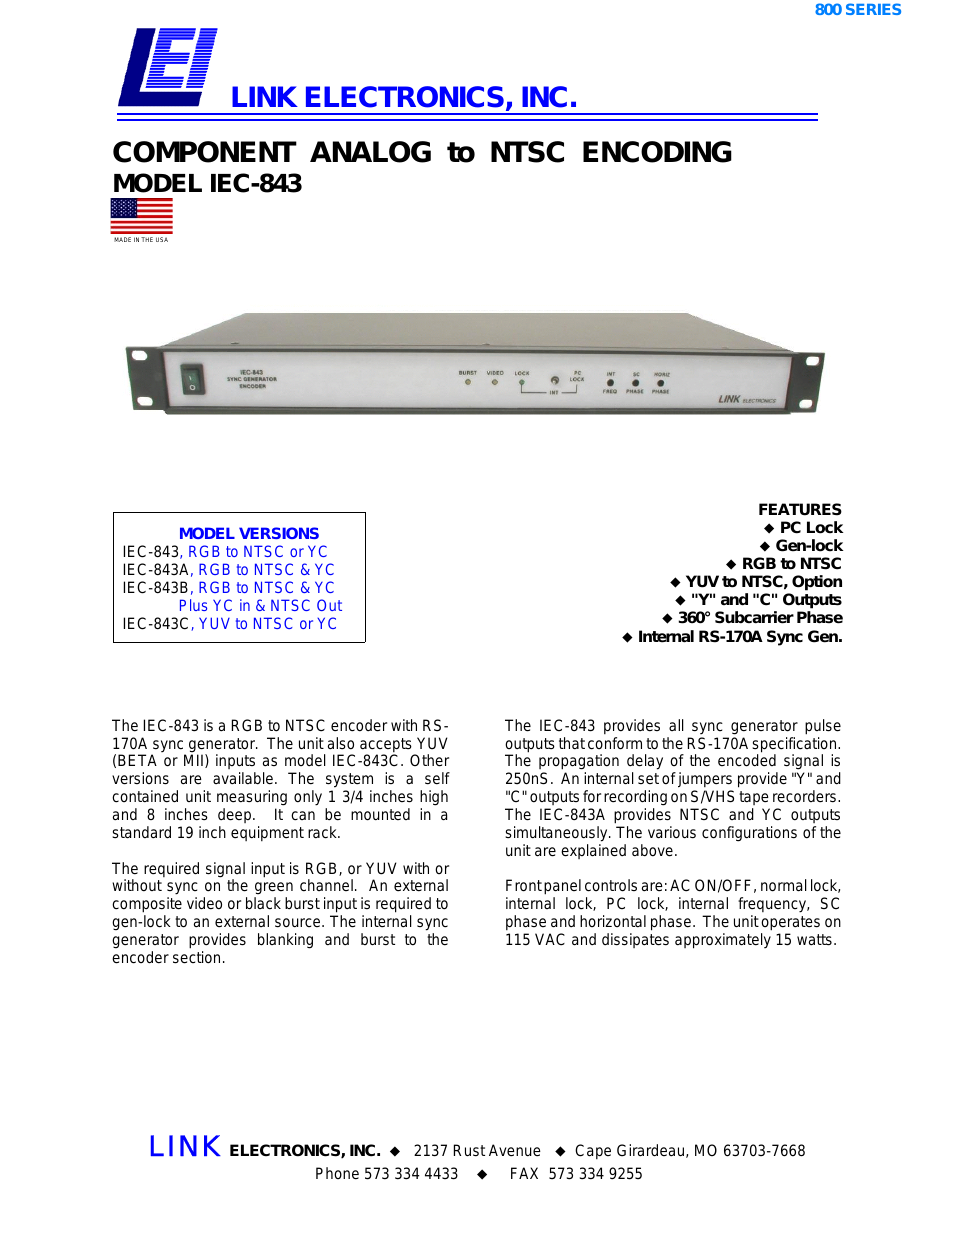 Component Analog to NTSC Encoding IEC-843